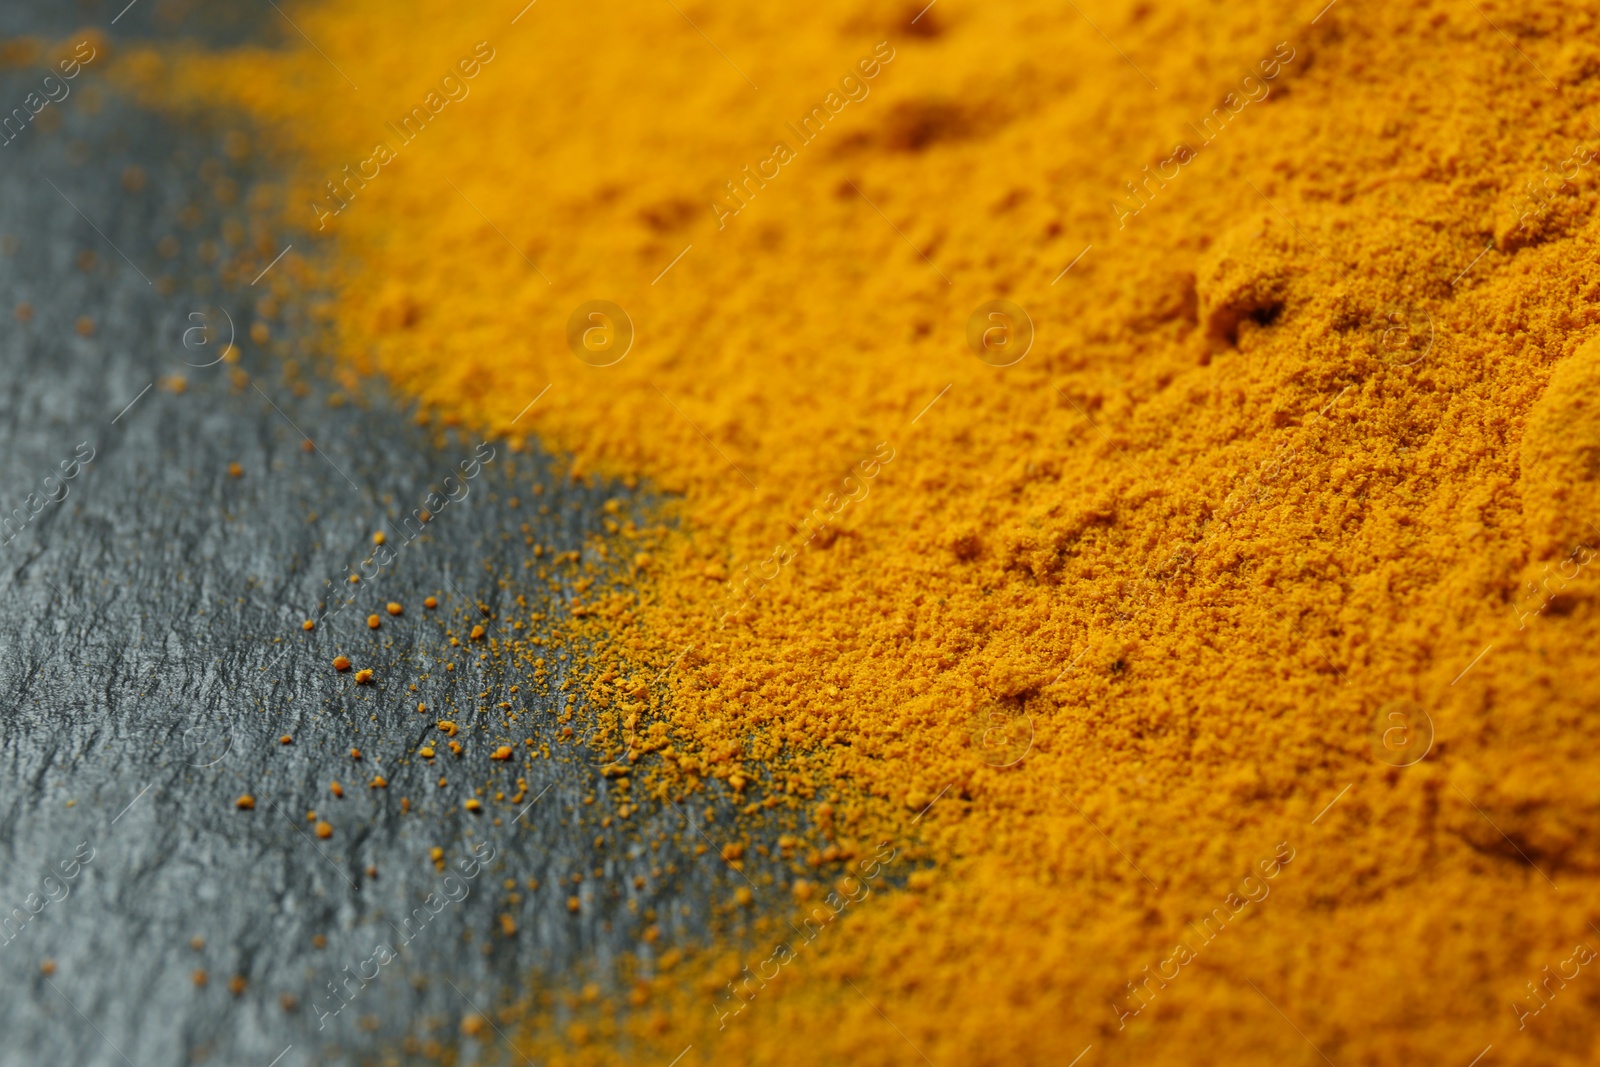 Photo of Turmeric powder on black textured table, closeup